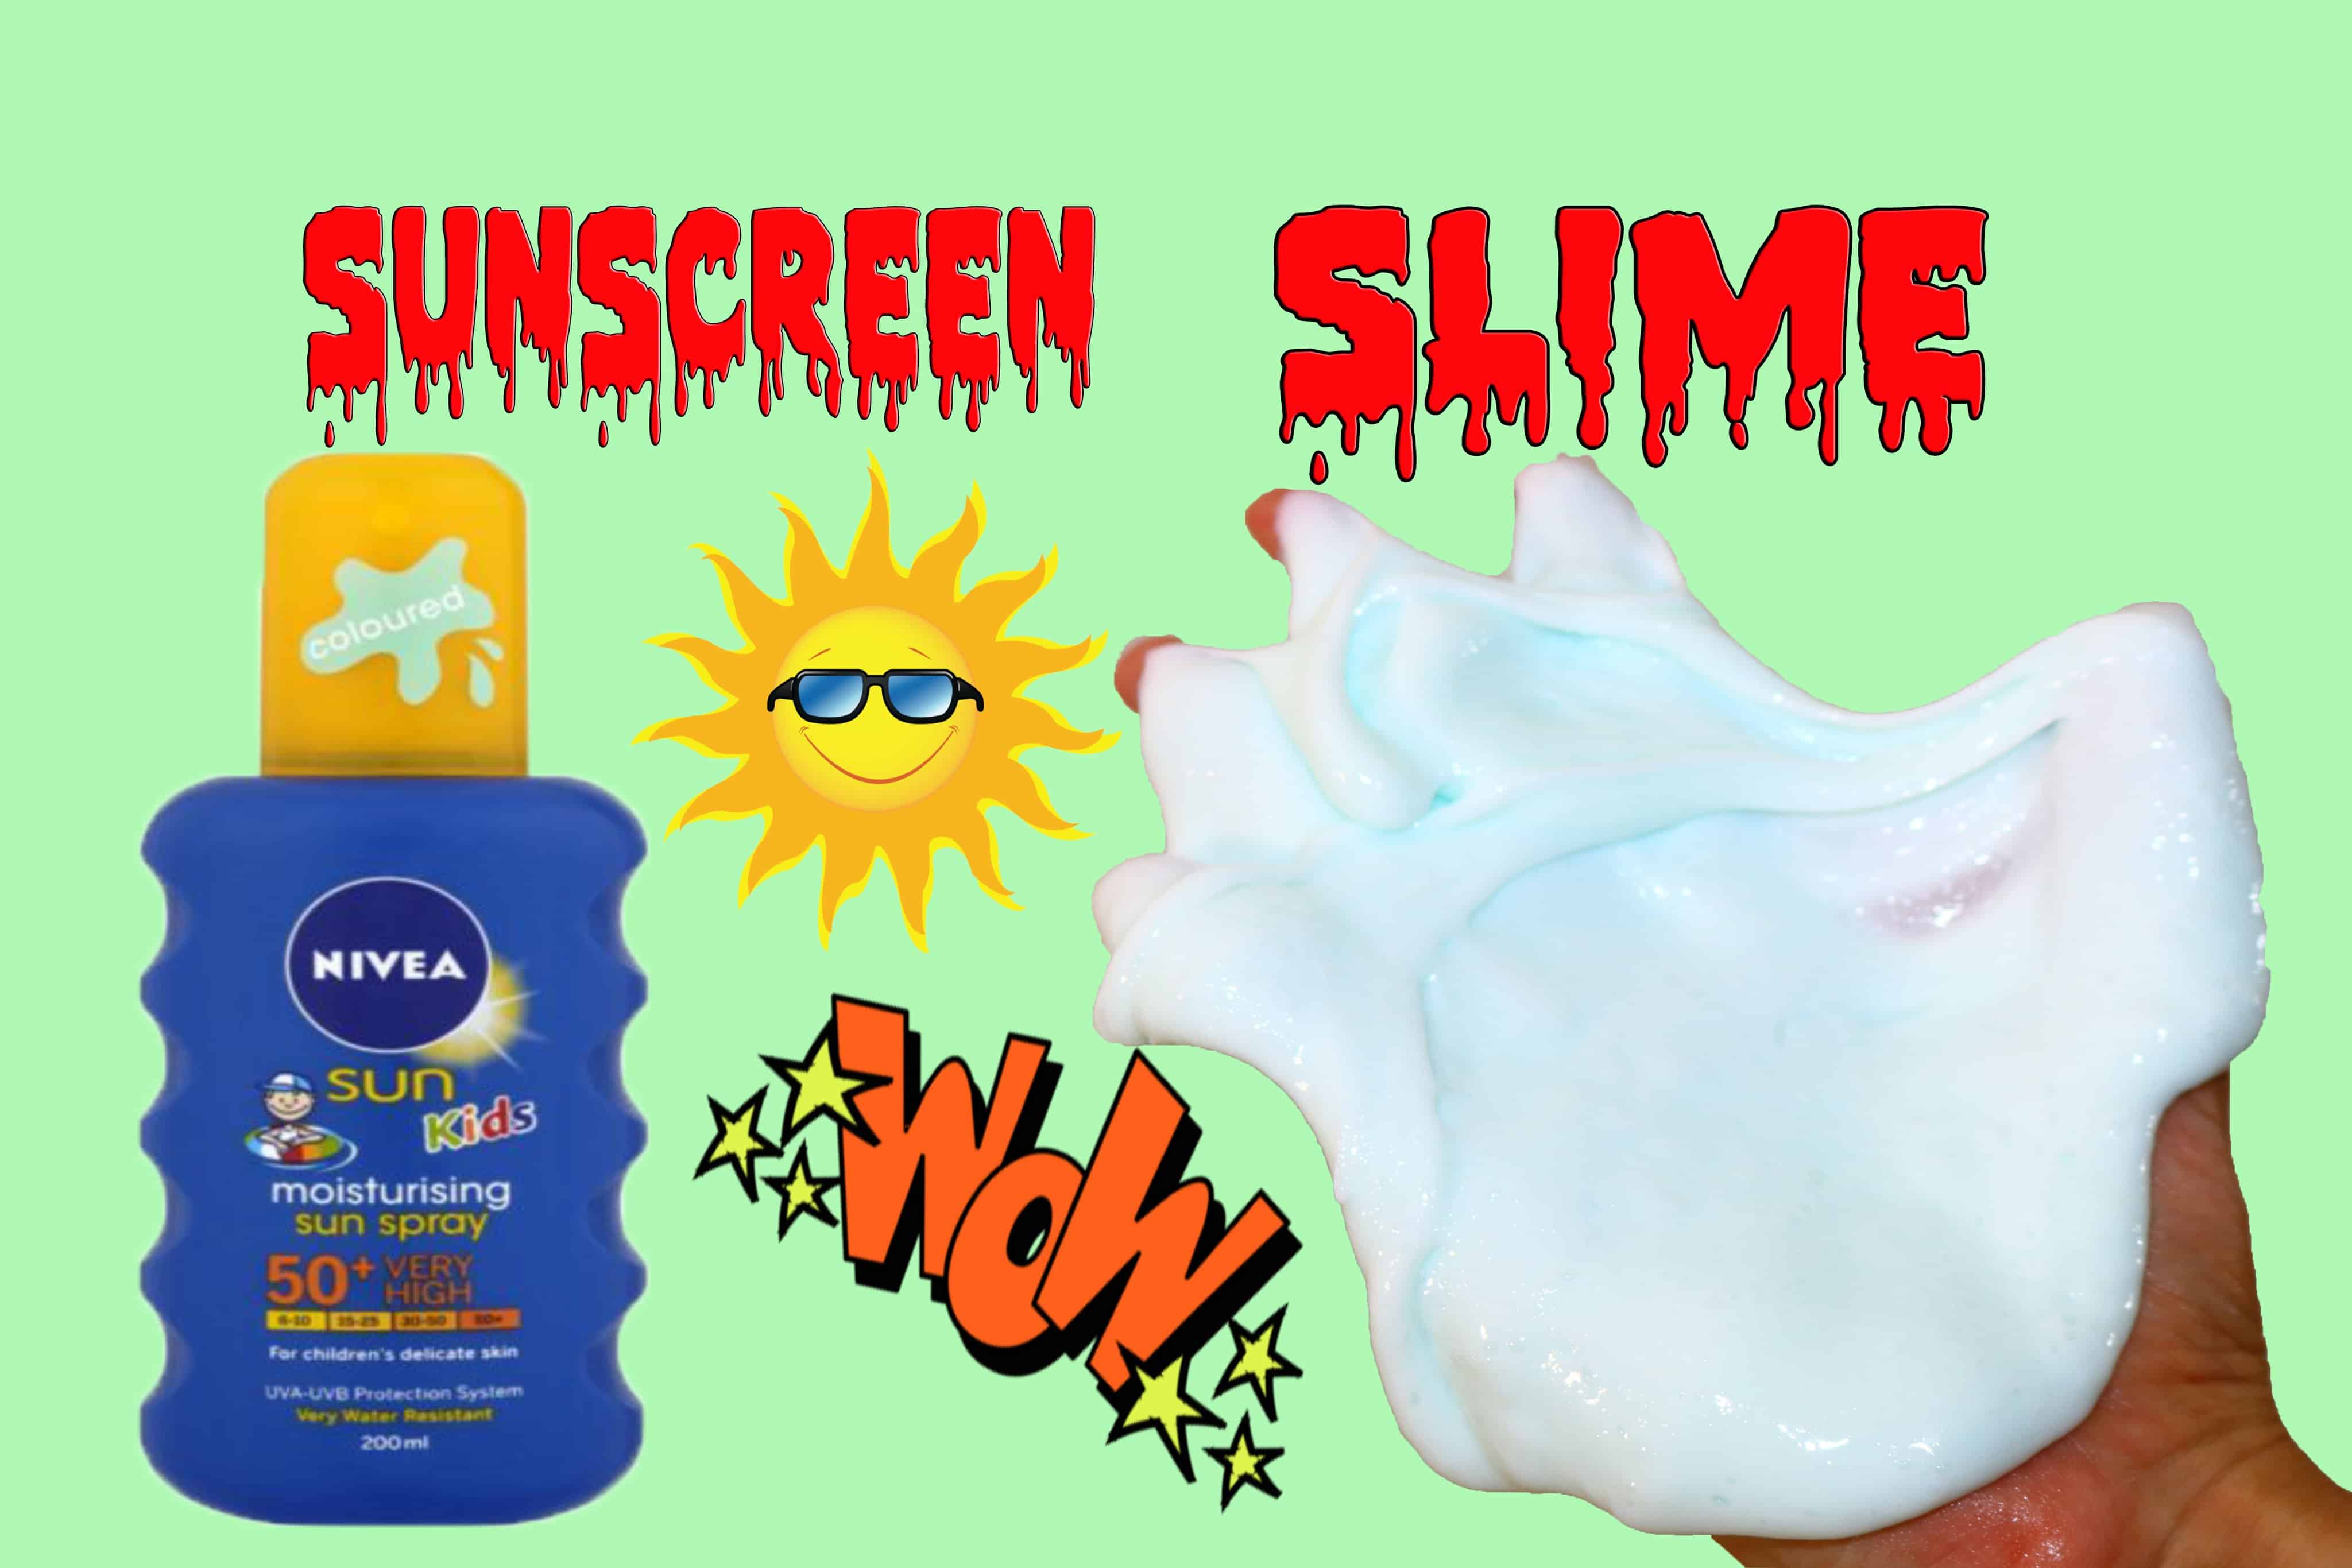 Sunscreen slime